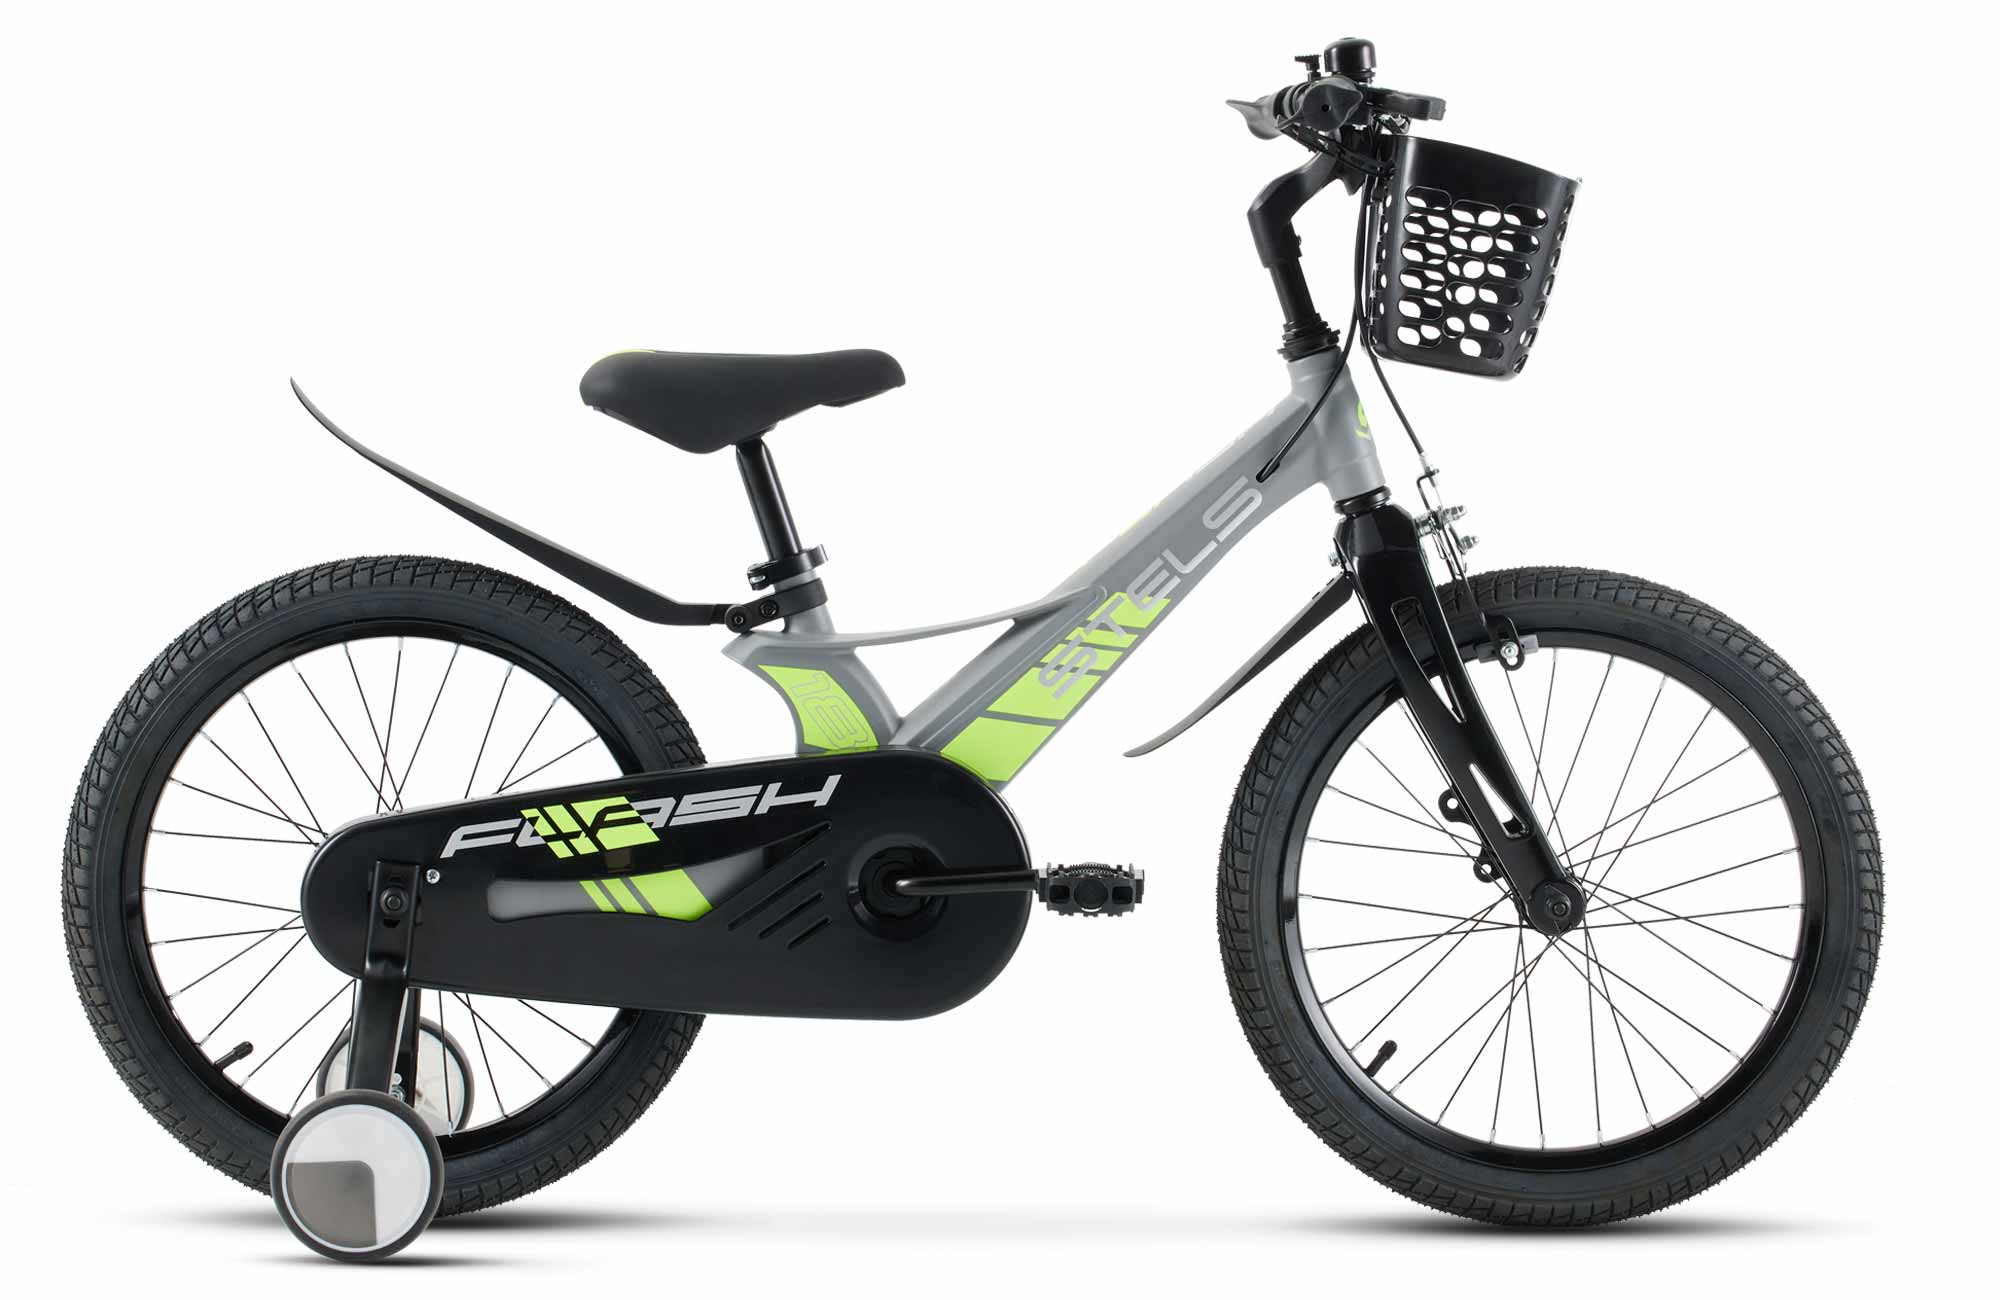 Детский велосипед STELS Flash KR 18 Z010 91 Серый, с дополнительными колесами велосипед детский двухколесный stels 16 jet z010